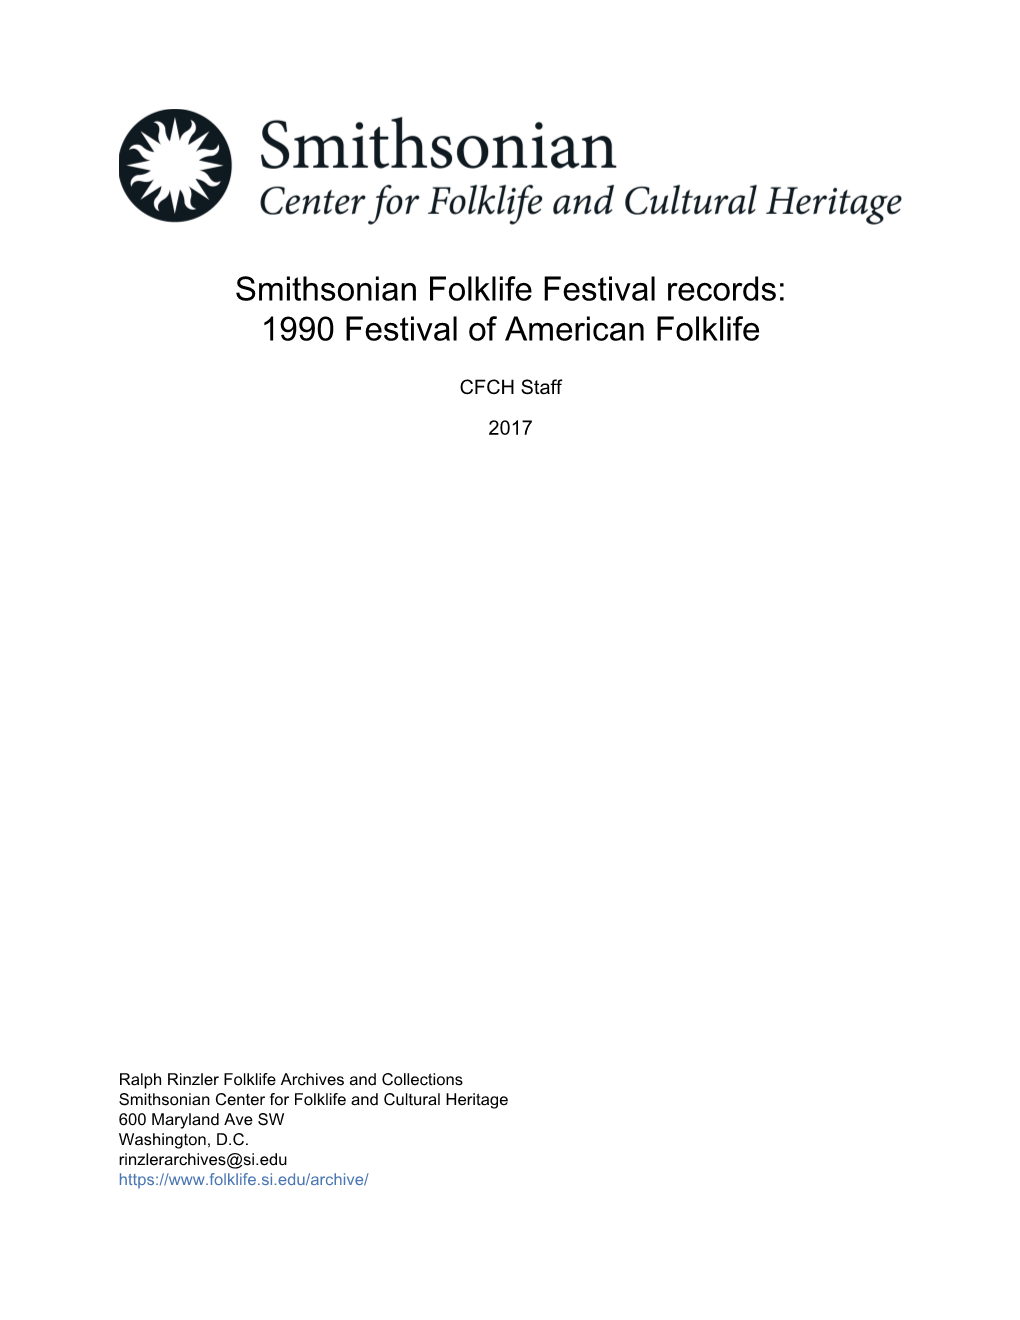 Smithsonian Folklife Festival Records: 1990 Festival of American Folklife